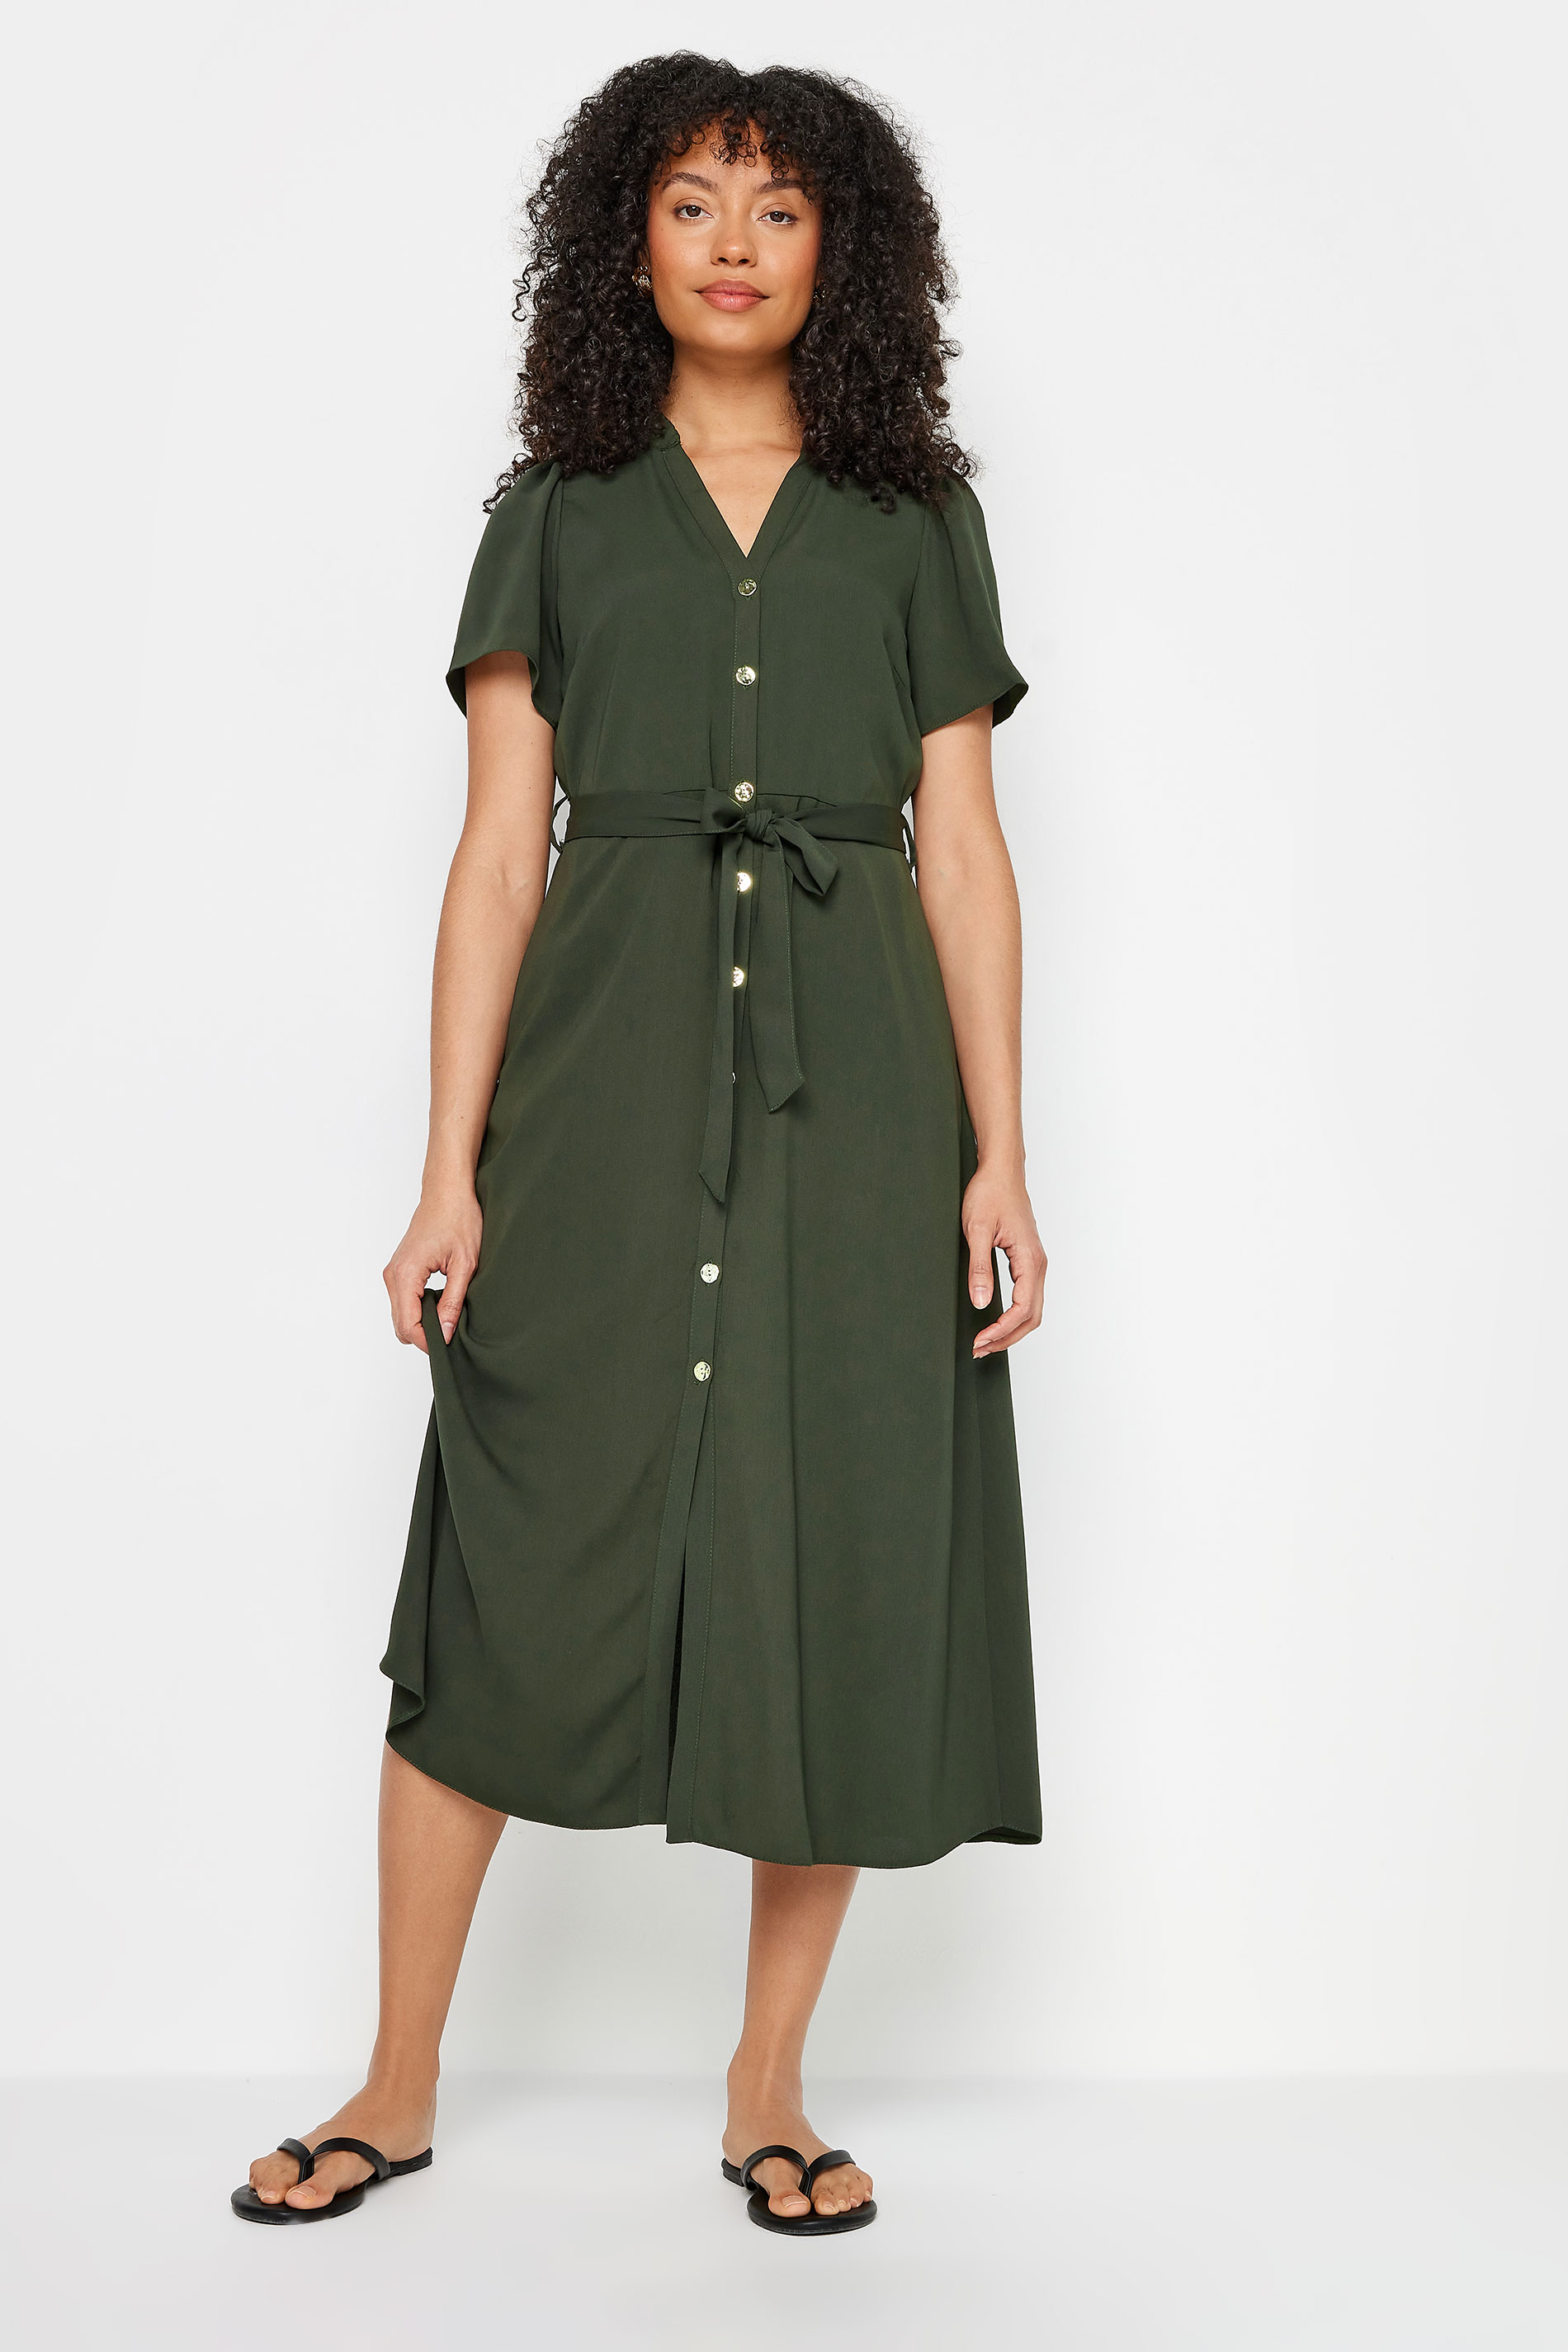 M&Co Khaki Green Button Through Midi Dress | M&Co 2